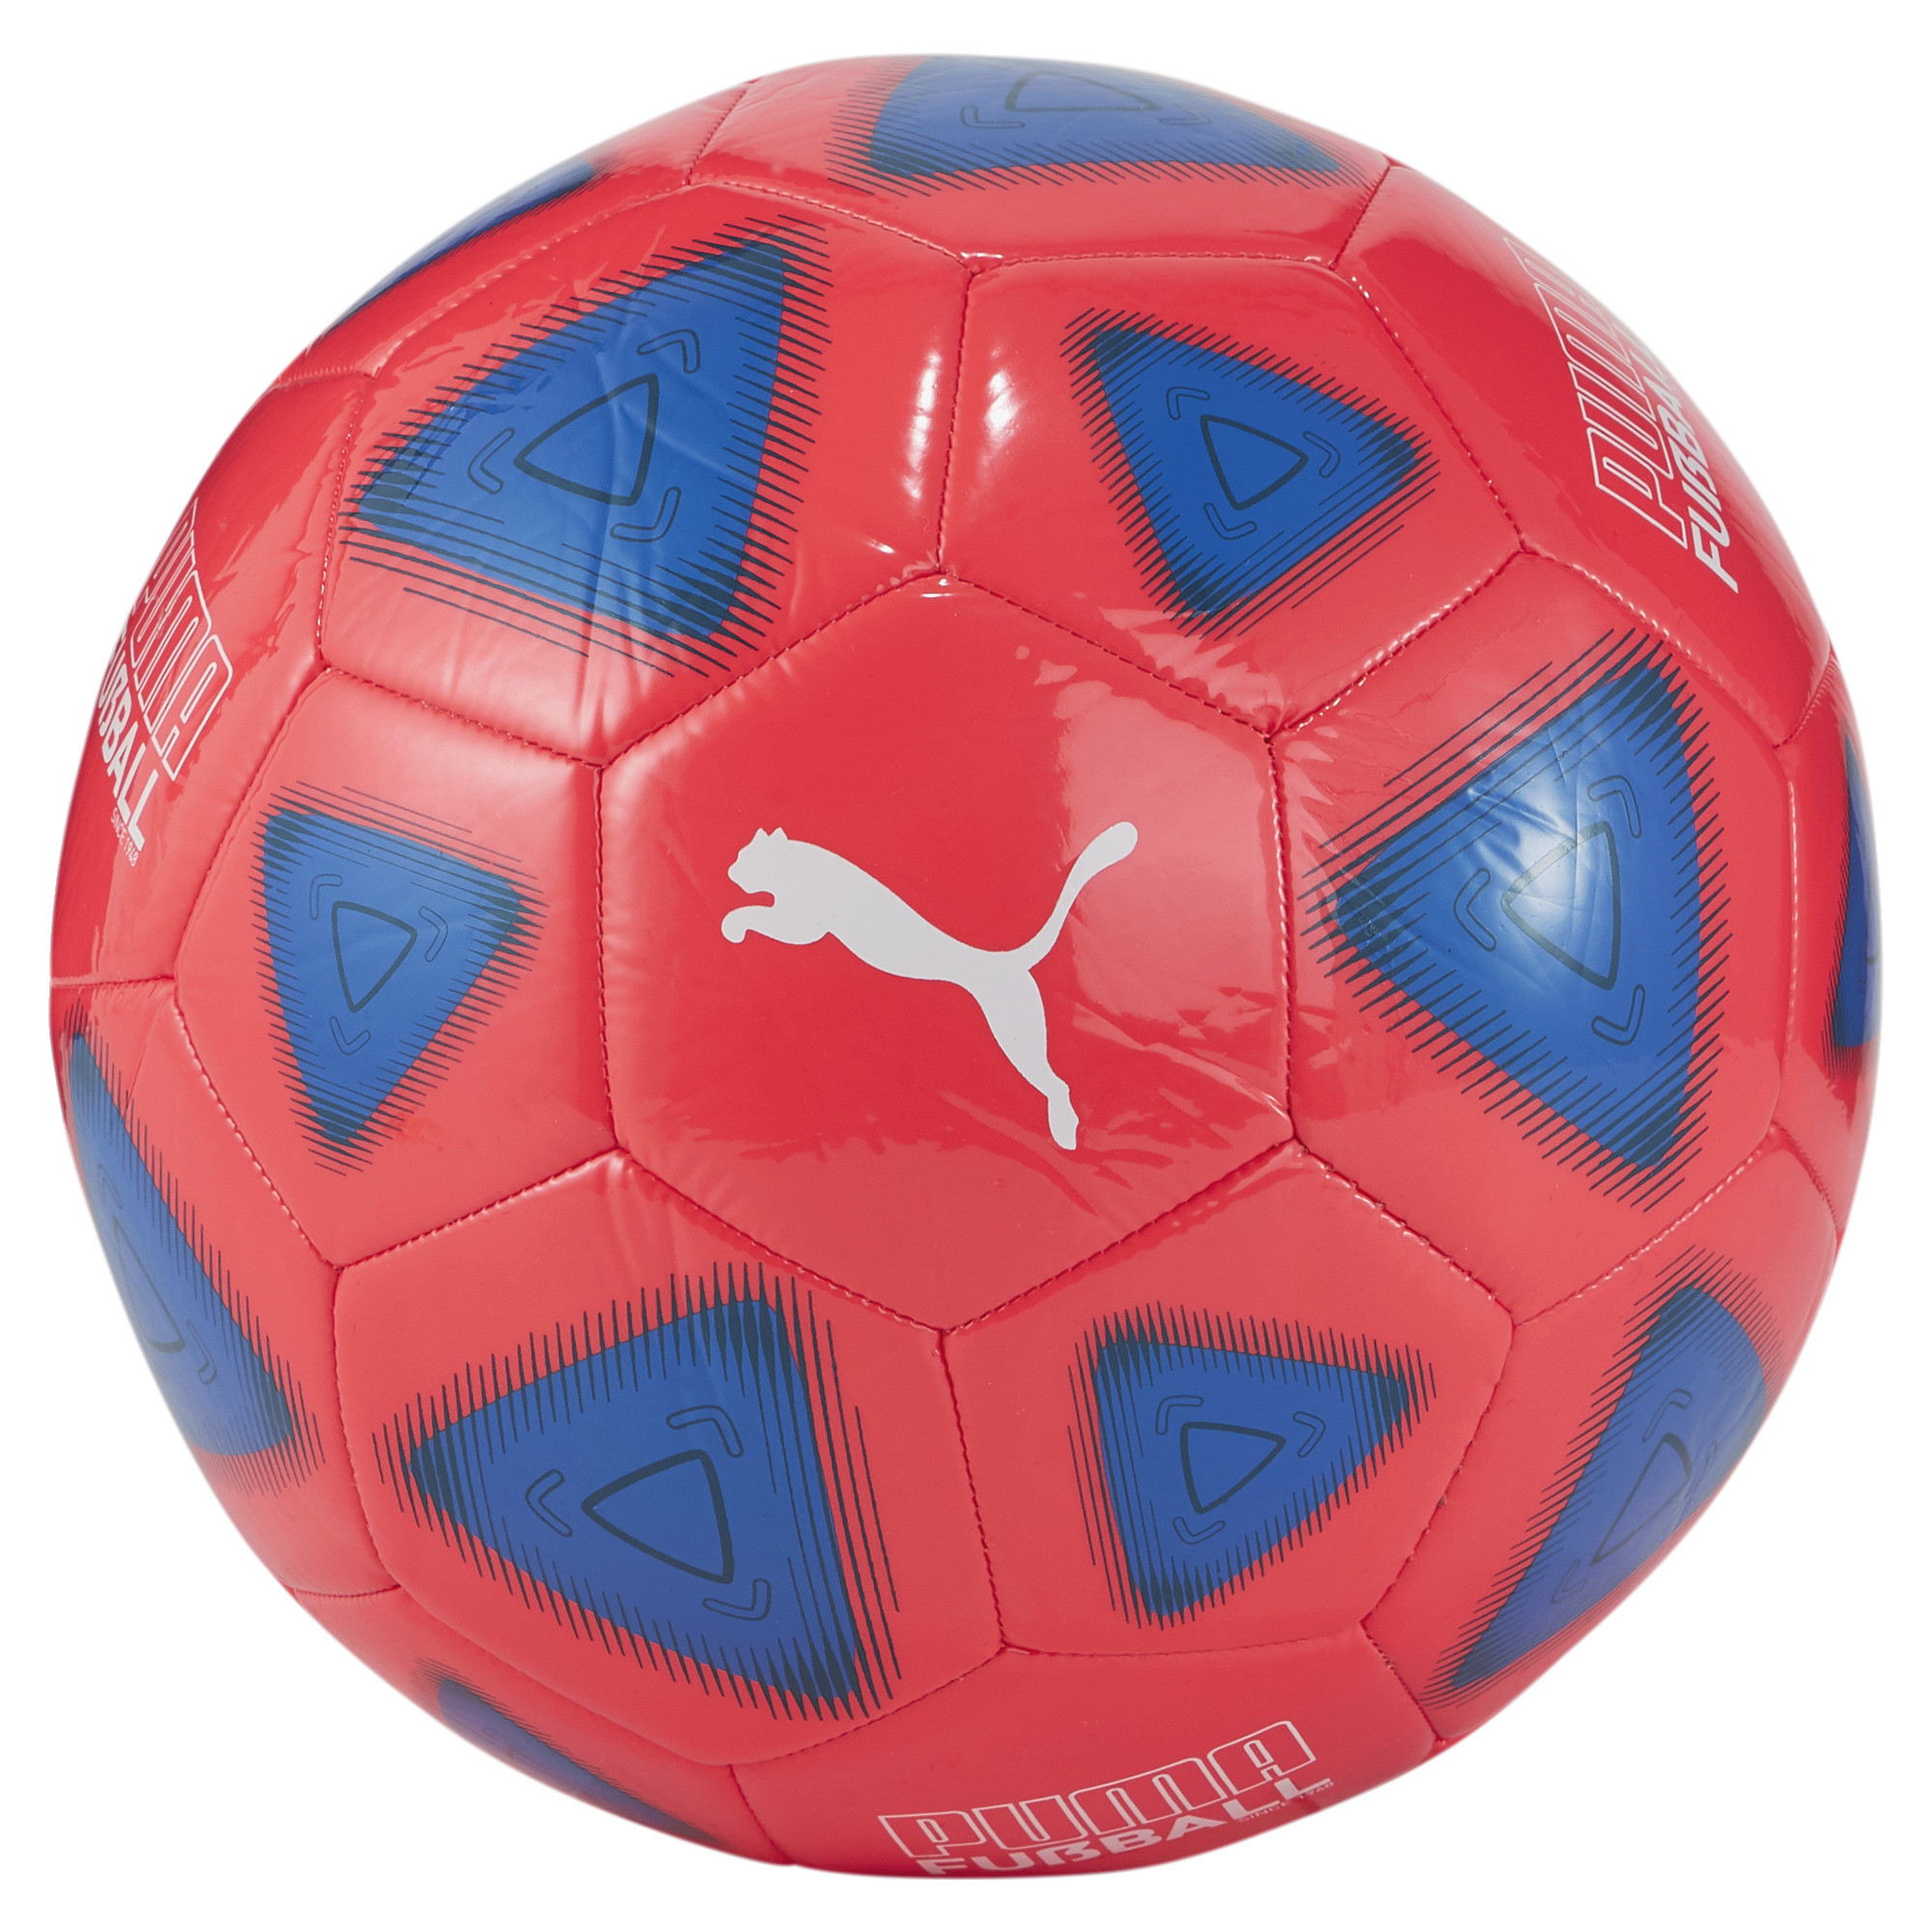 Футбольный мяч FUßBALL Prestige Football 1